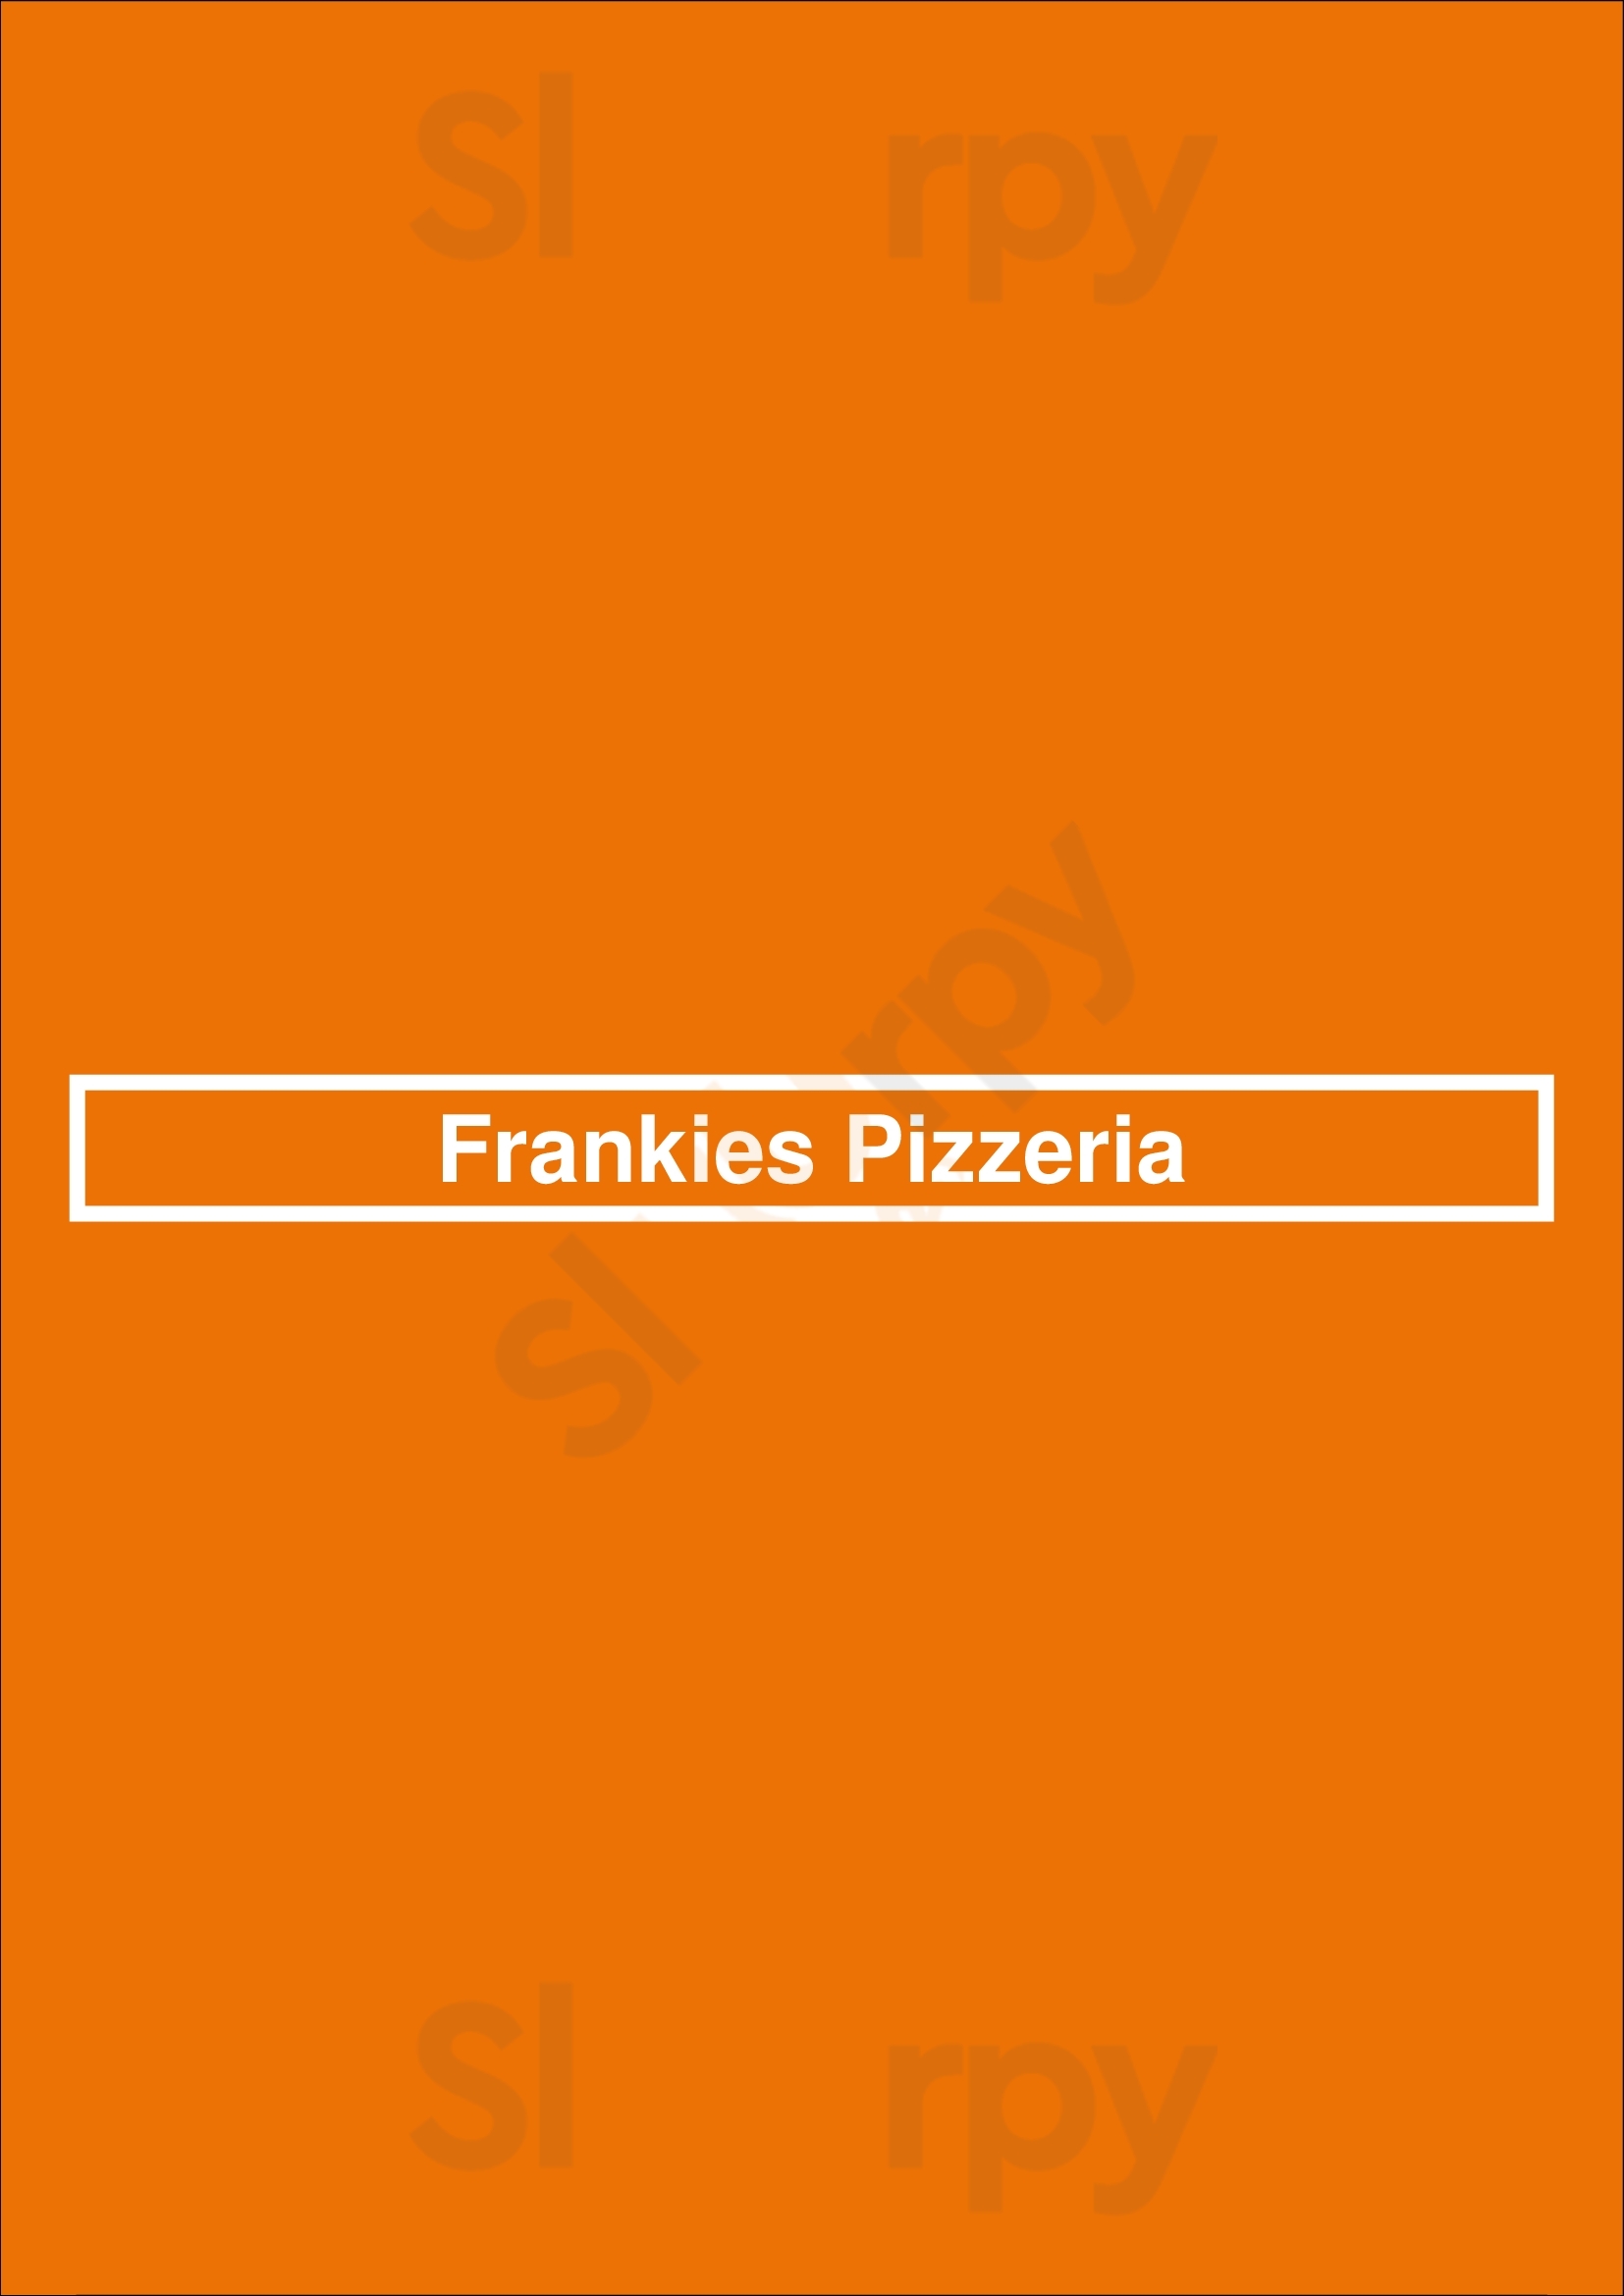 Frankies Pizzeria Miami Menu - 1